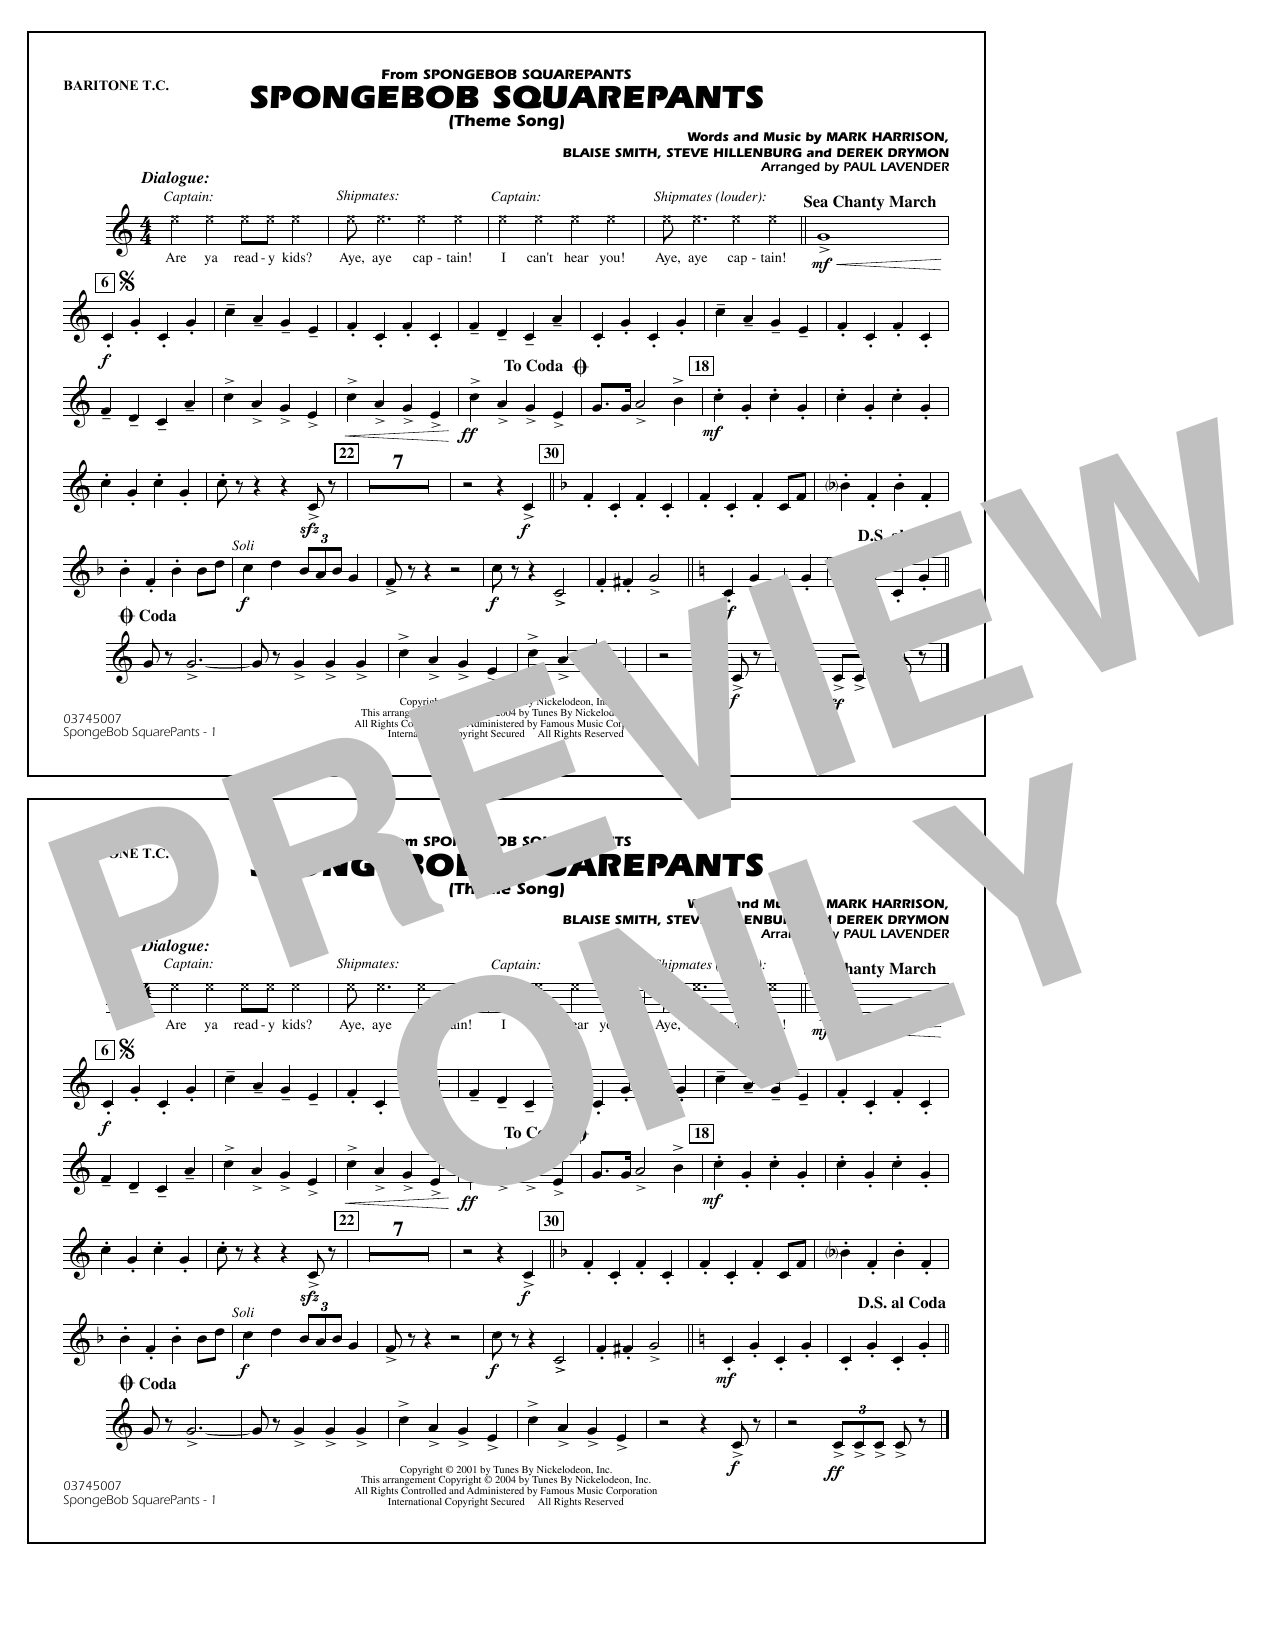 Steve Hillenburg Spongebob Squarepants (Theme Song) (arr. Paul Lavender) - Baritone T.C. Sheet Music Notes & Chords for Marching Band - Download or Print PDF